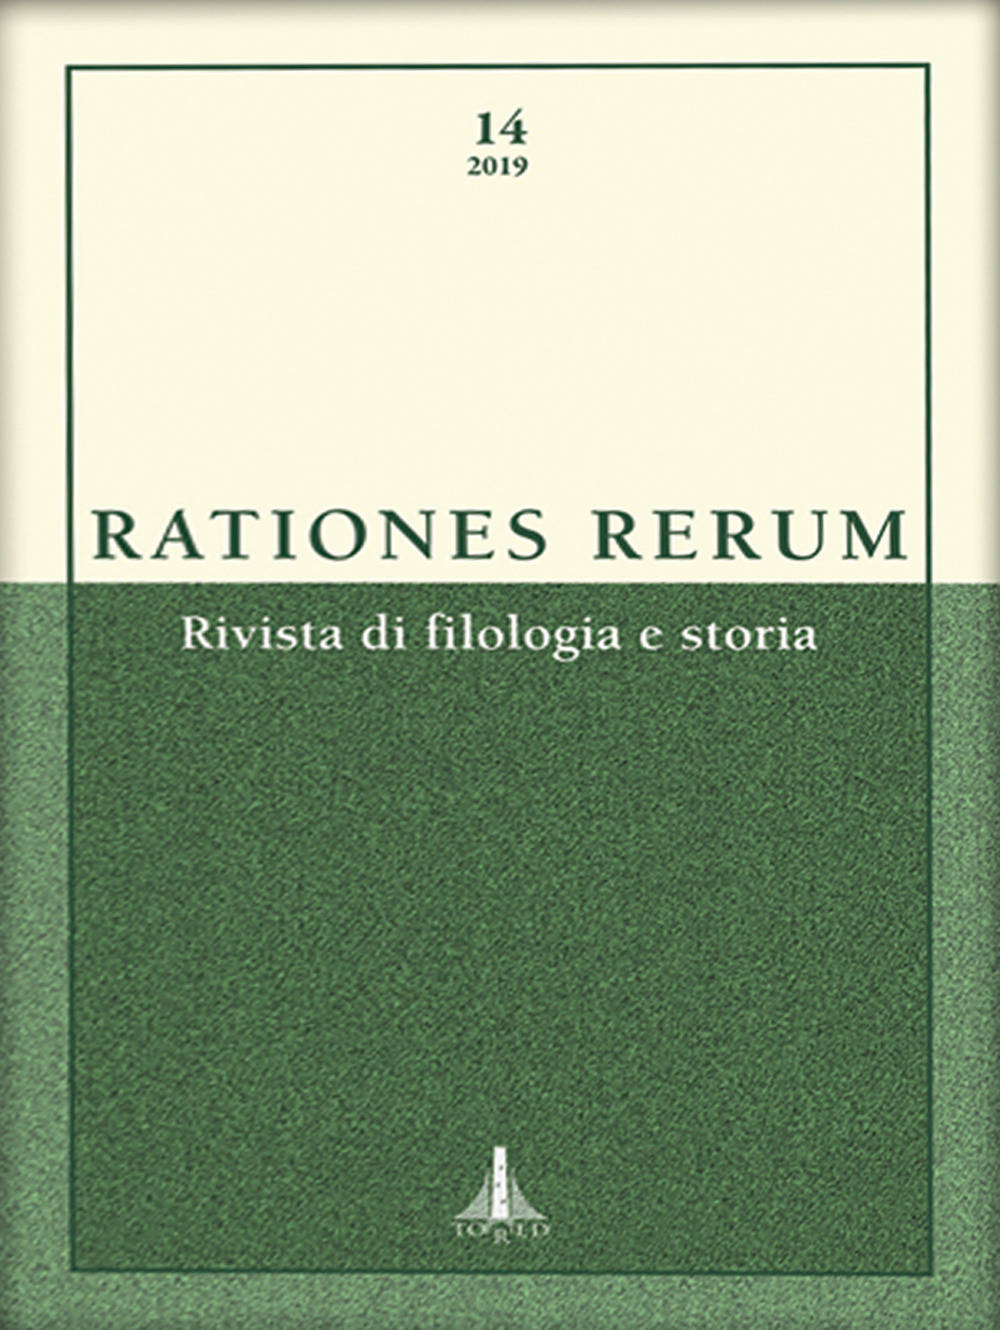 Rationes rerum. Rivista di filologia e storia. Ediz. multilingue. Vol. 14